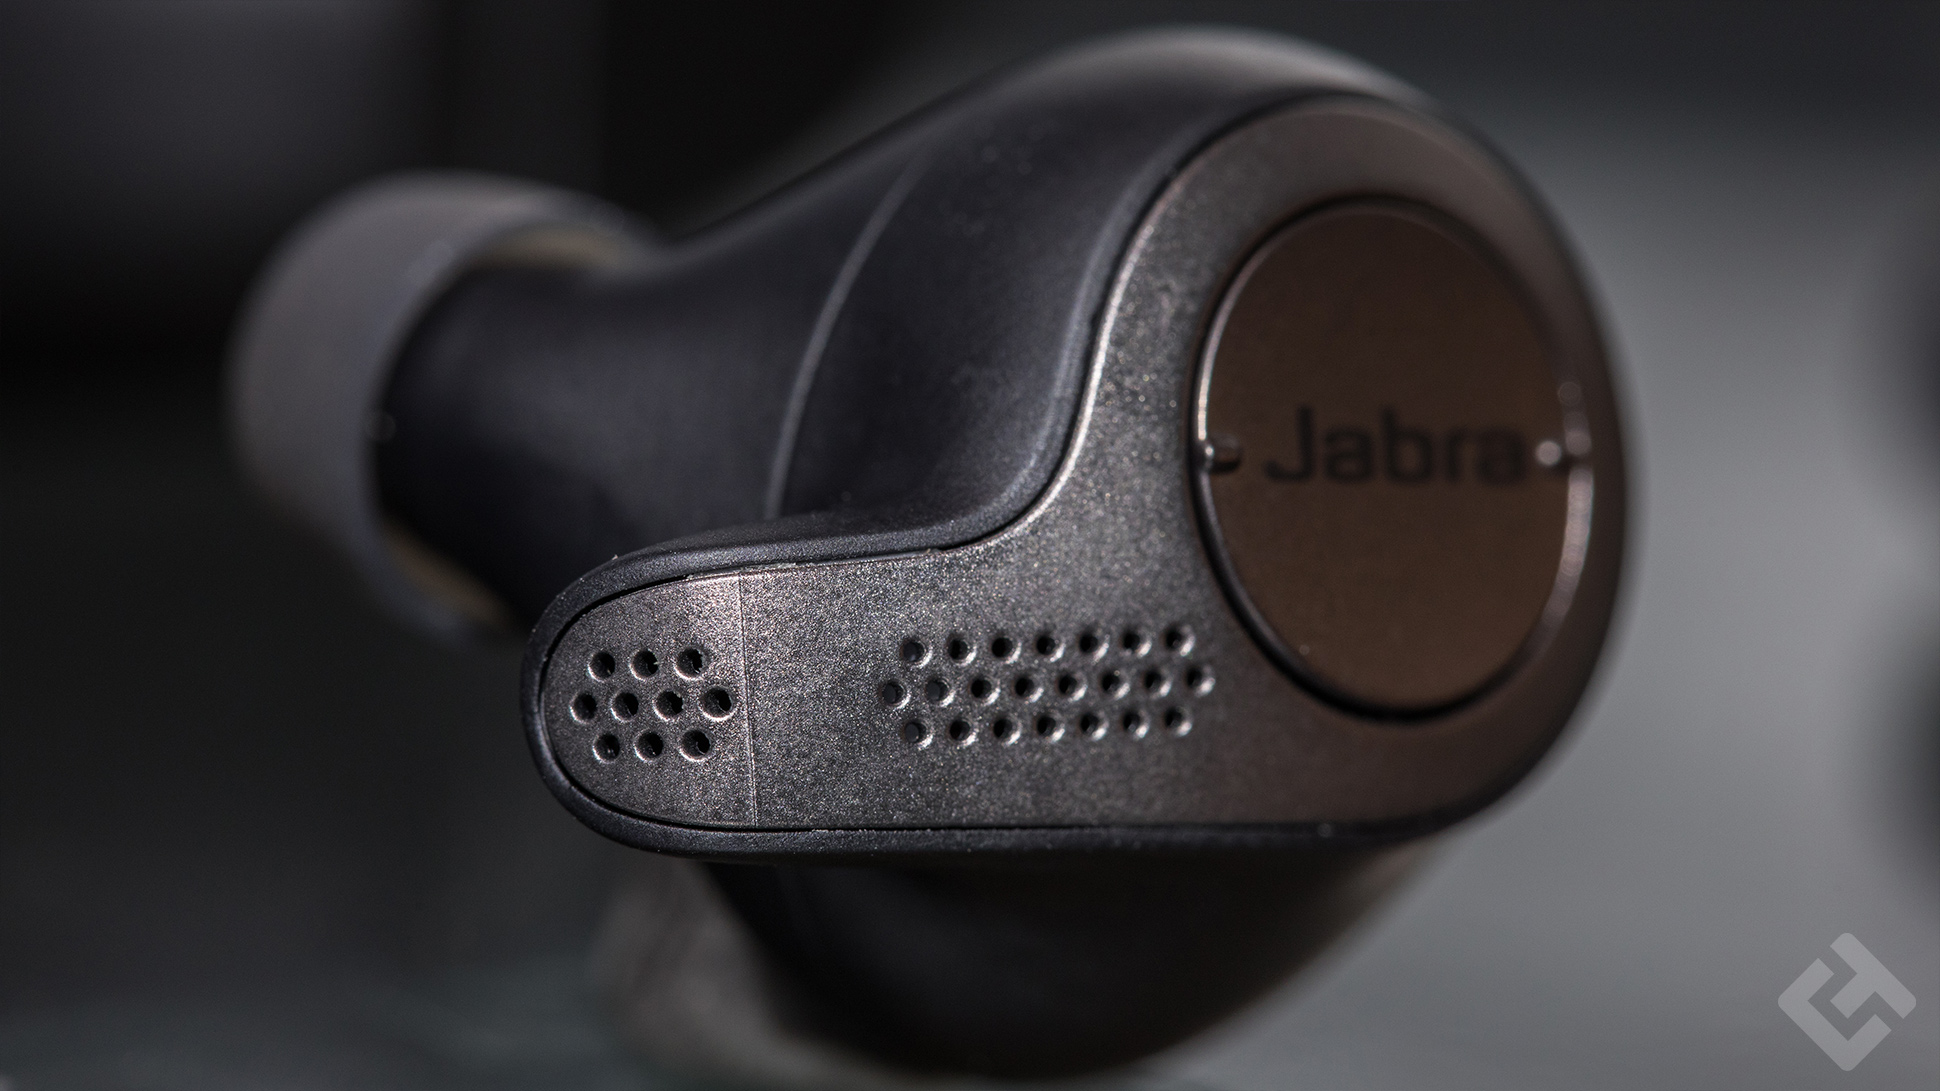 Jabra Evolve 65t - Design